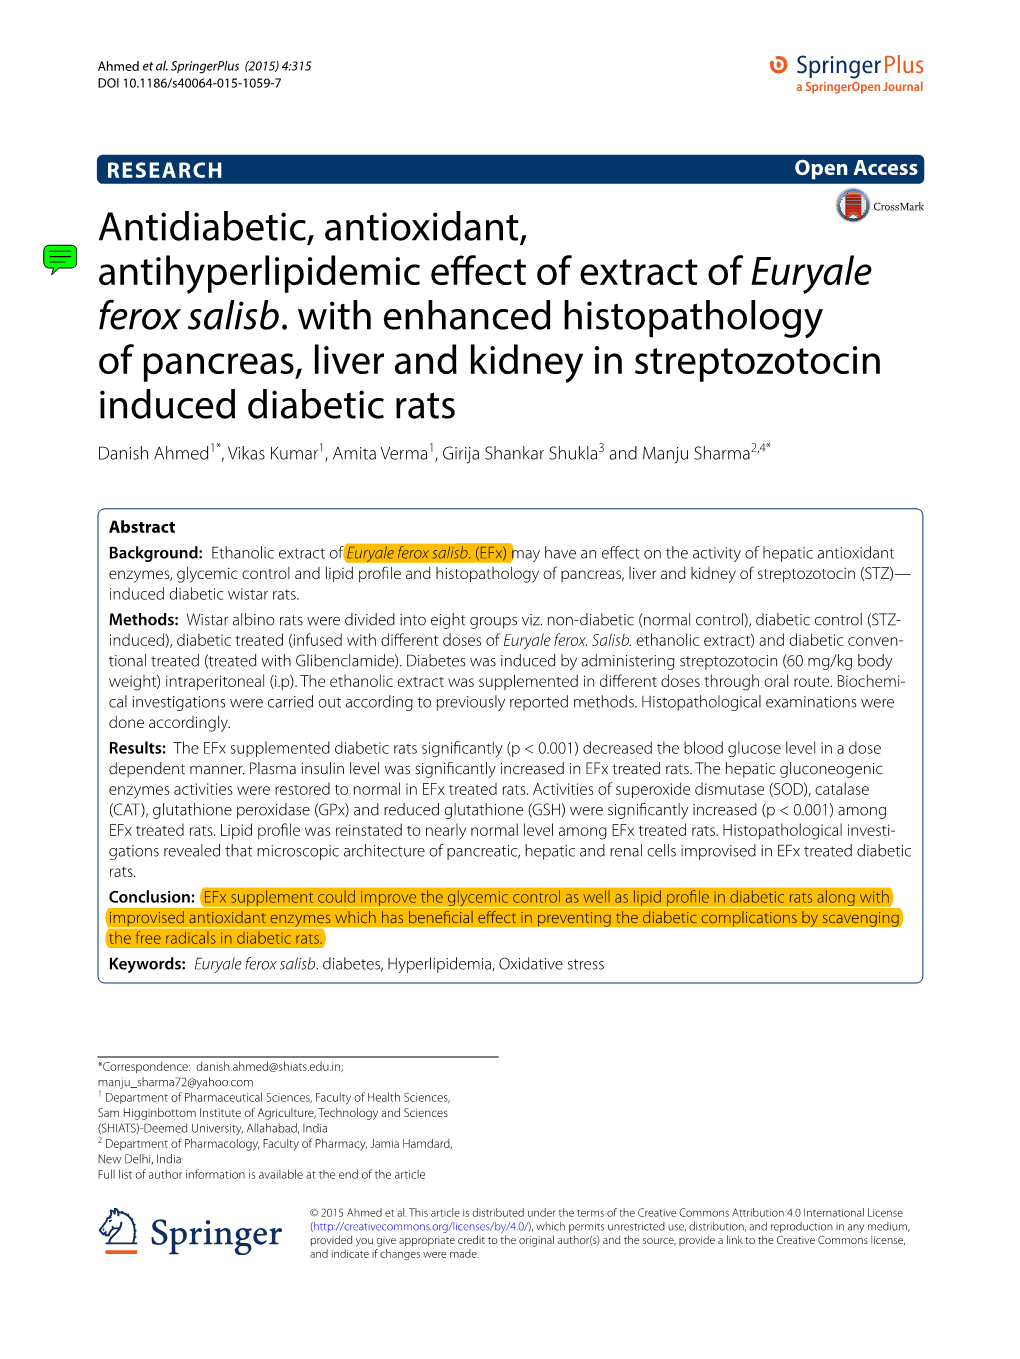 Antidiabetic, Antioxidant, Antihyperlipidemic Effect of Extract of Euryale Ferox Salisb. with Enhanced Histopathology of Pancrea